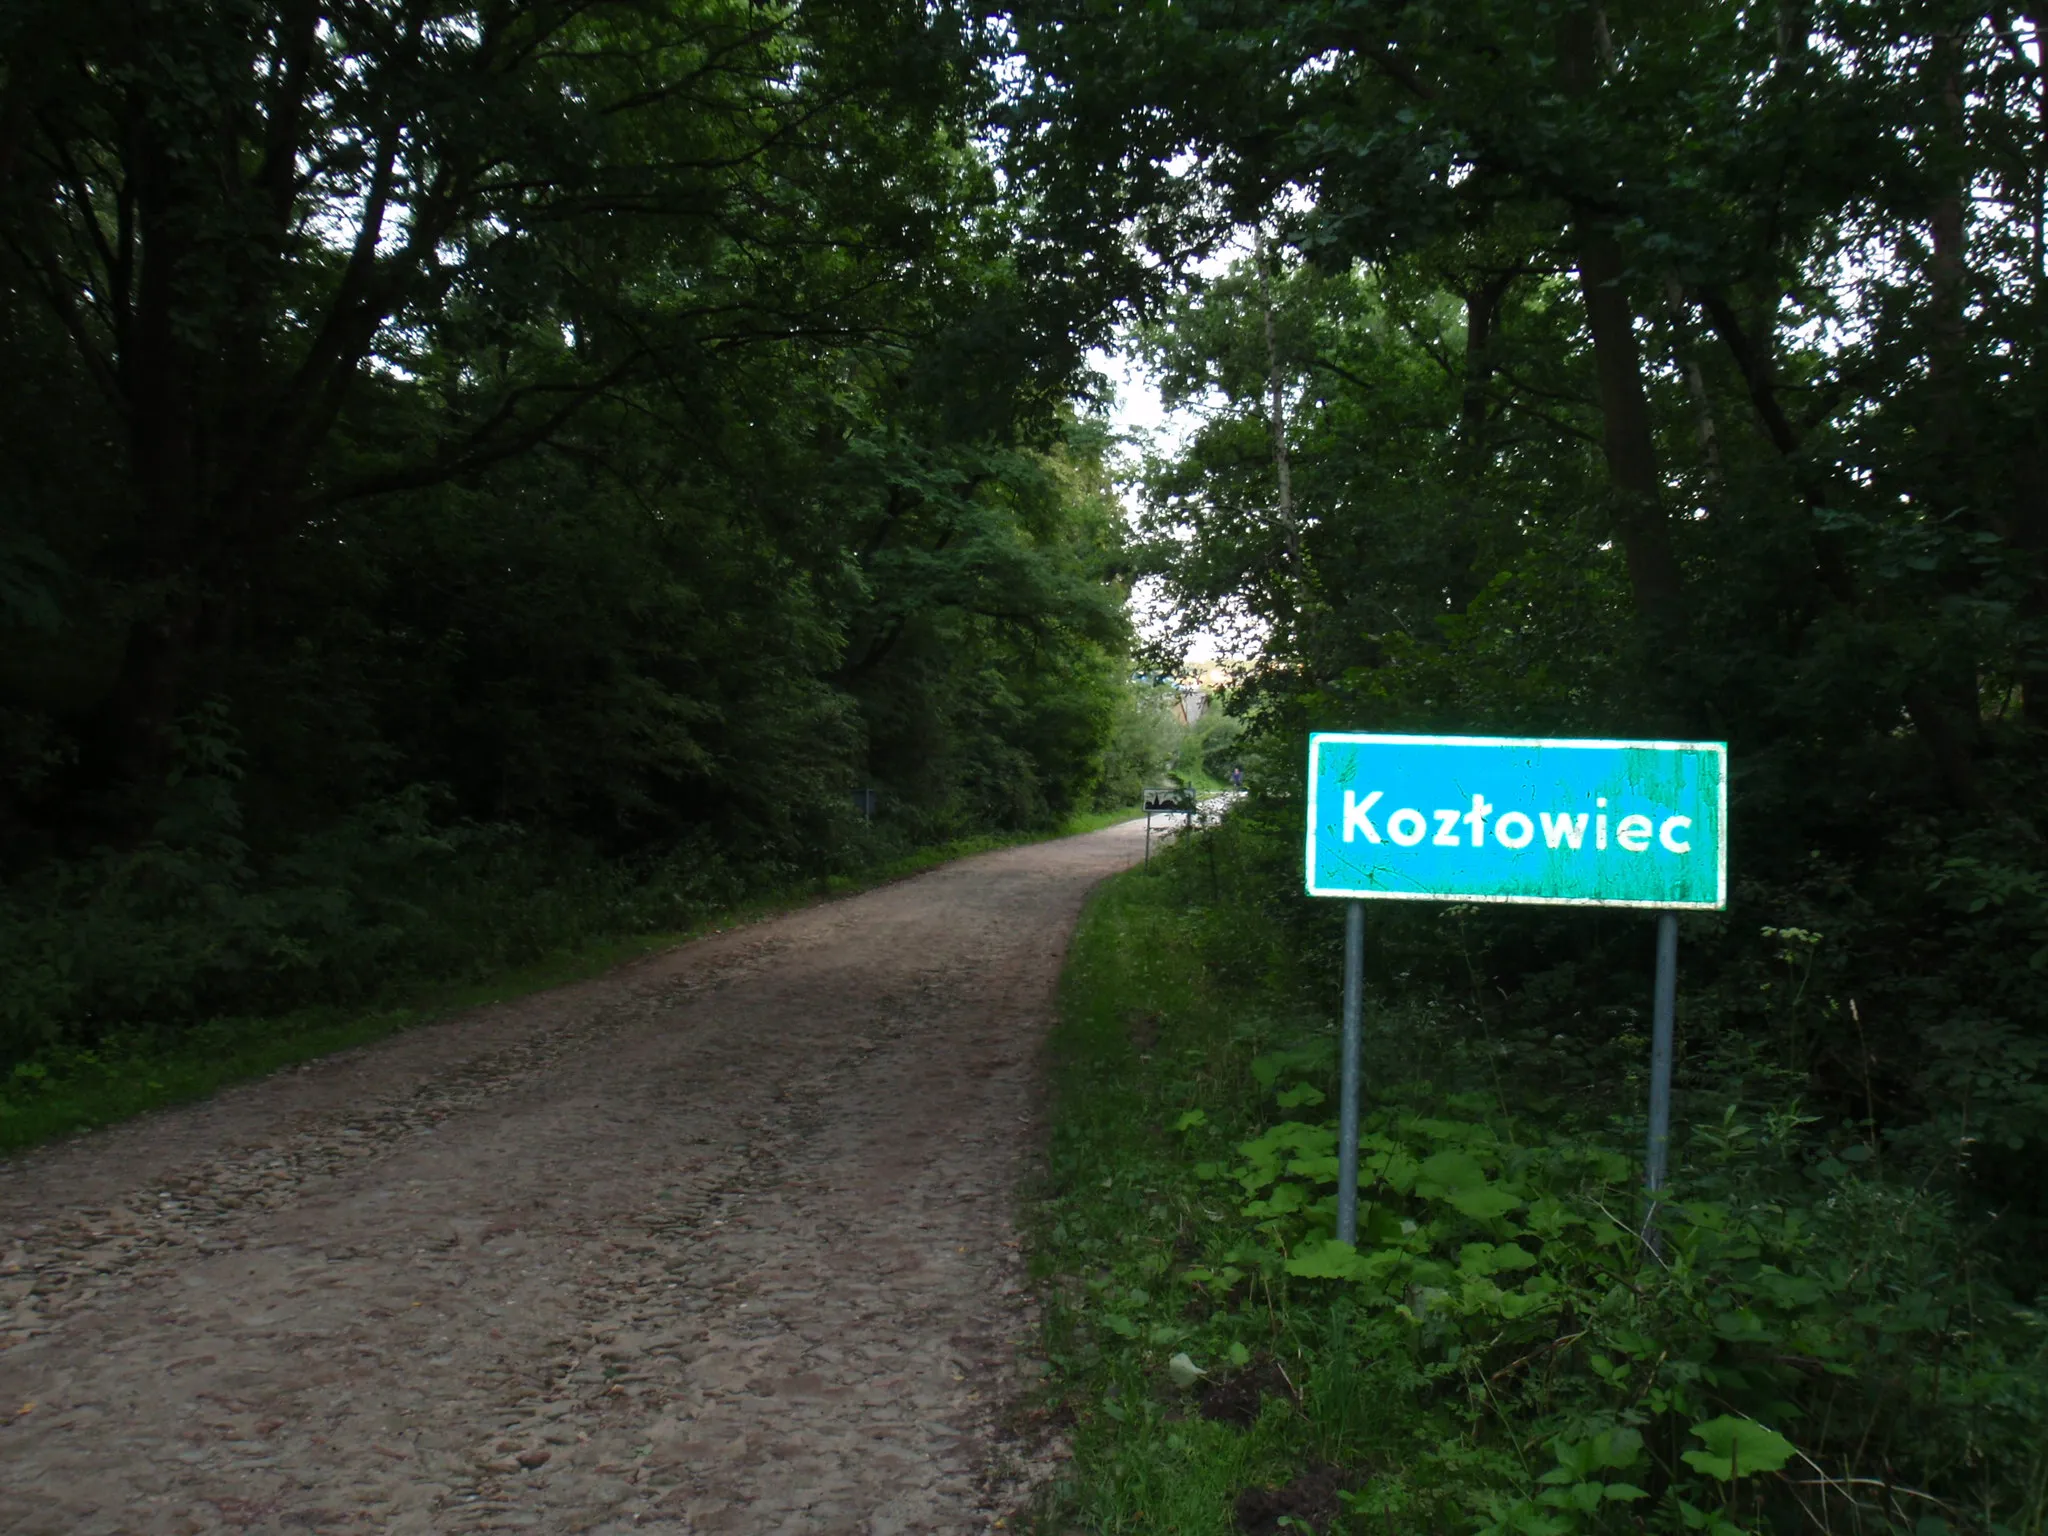 Photo showing: Kozłowiec, Masovian voivodeship